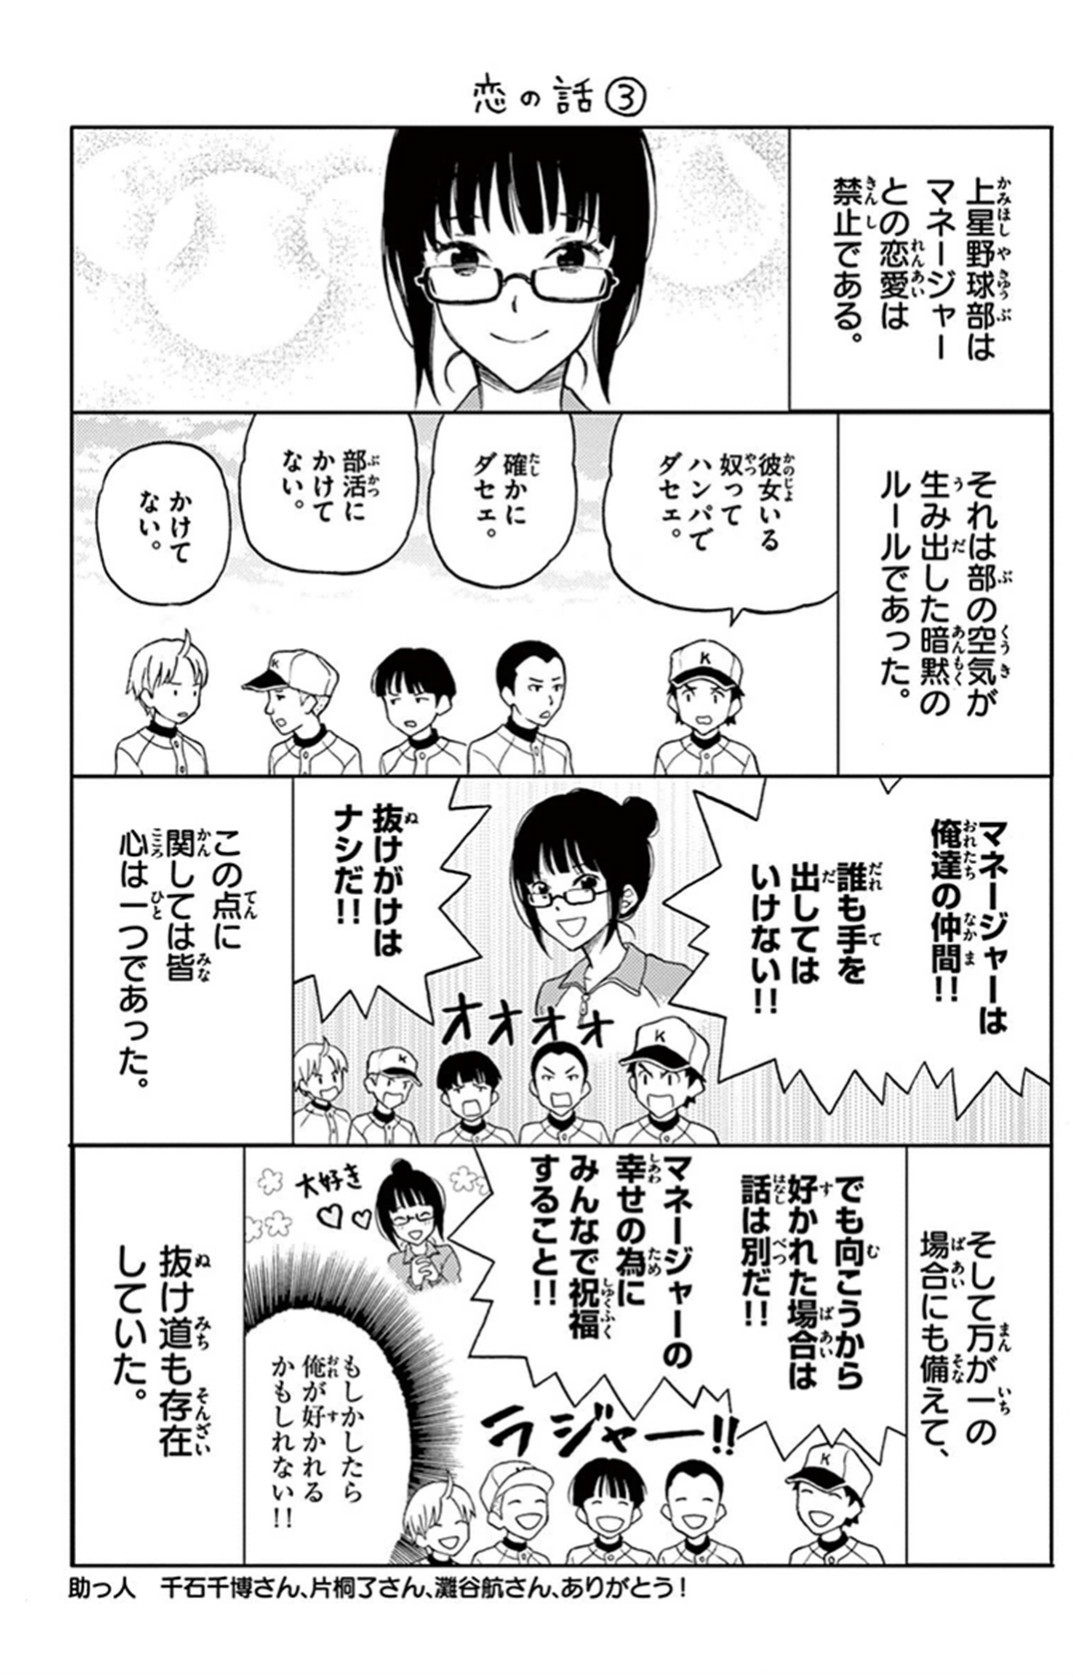 Yugami-kun ni wa Tomodachi ga Inai - Chapter 026.5 - Page 4